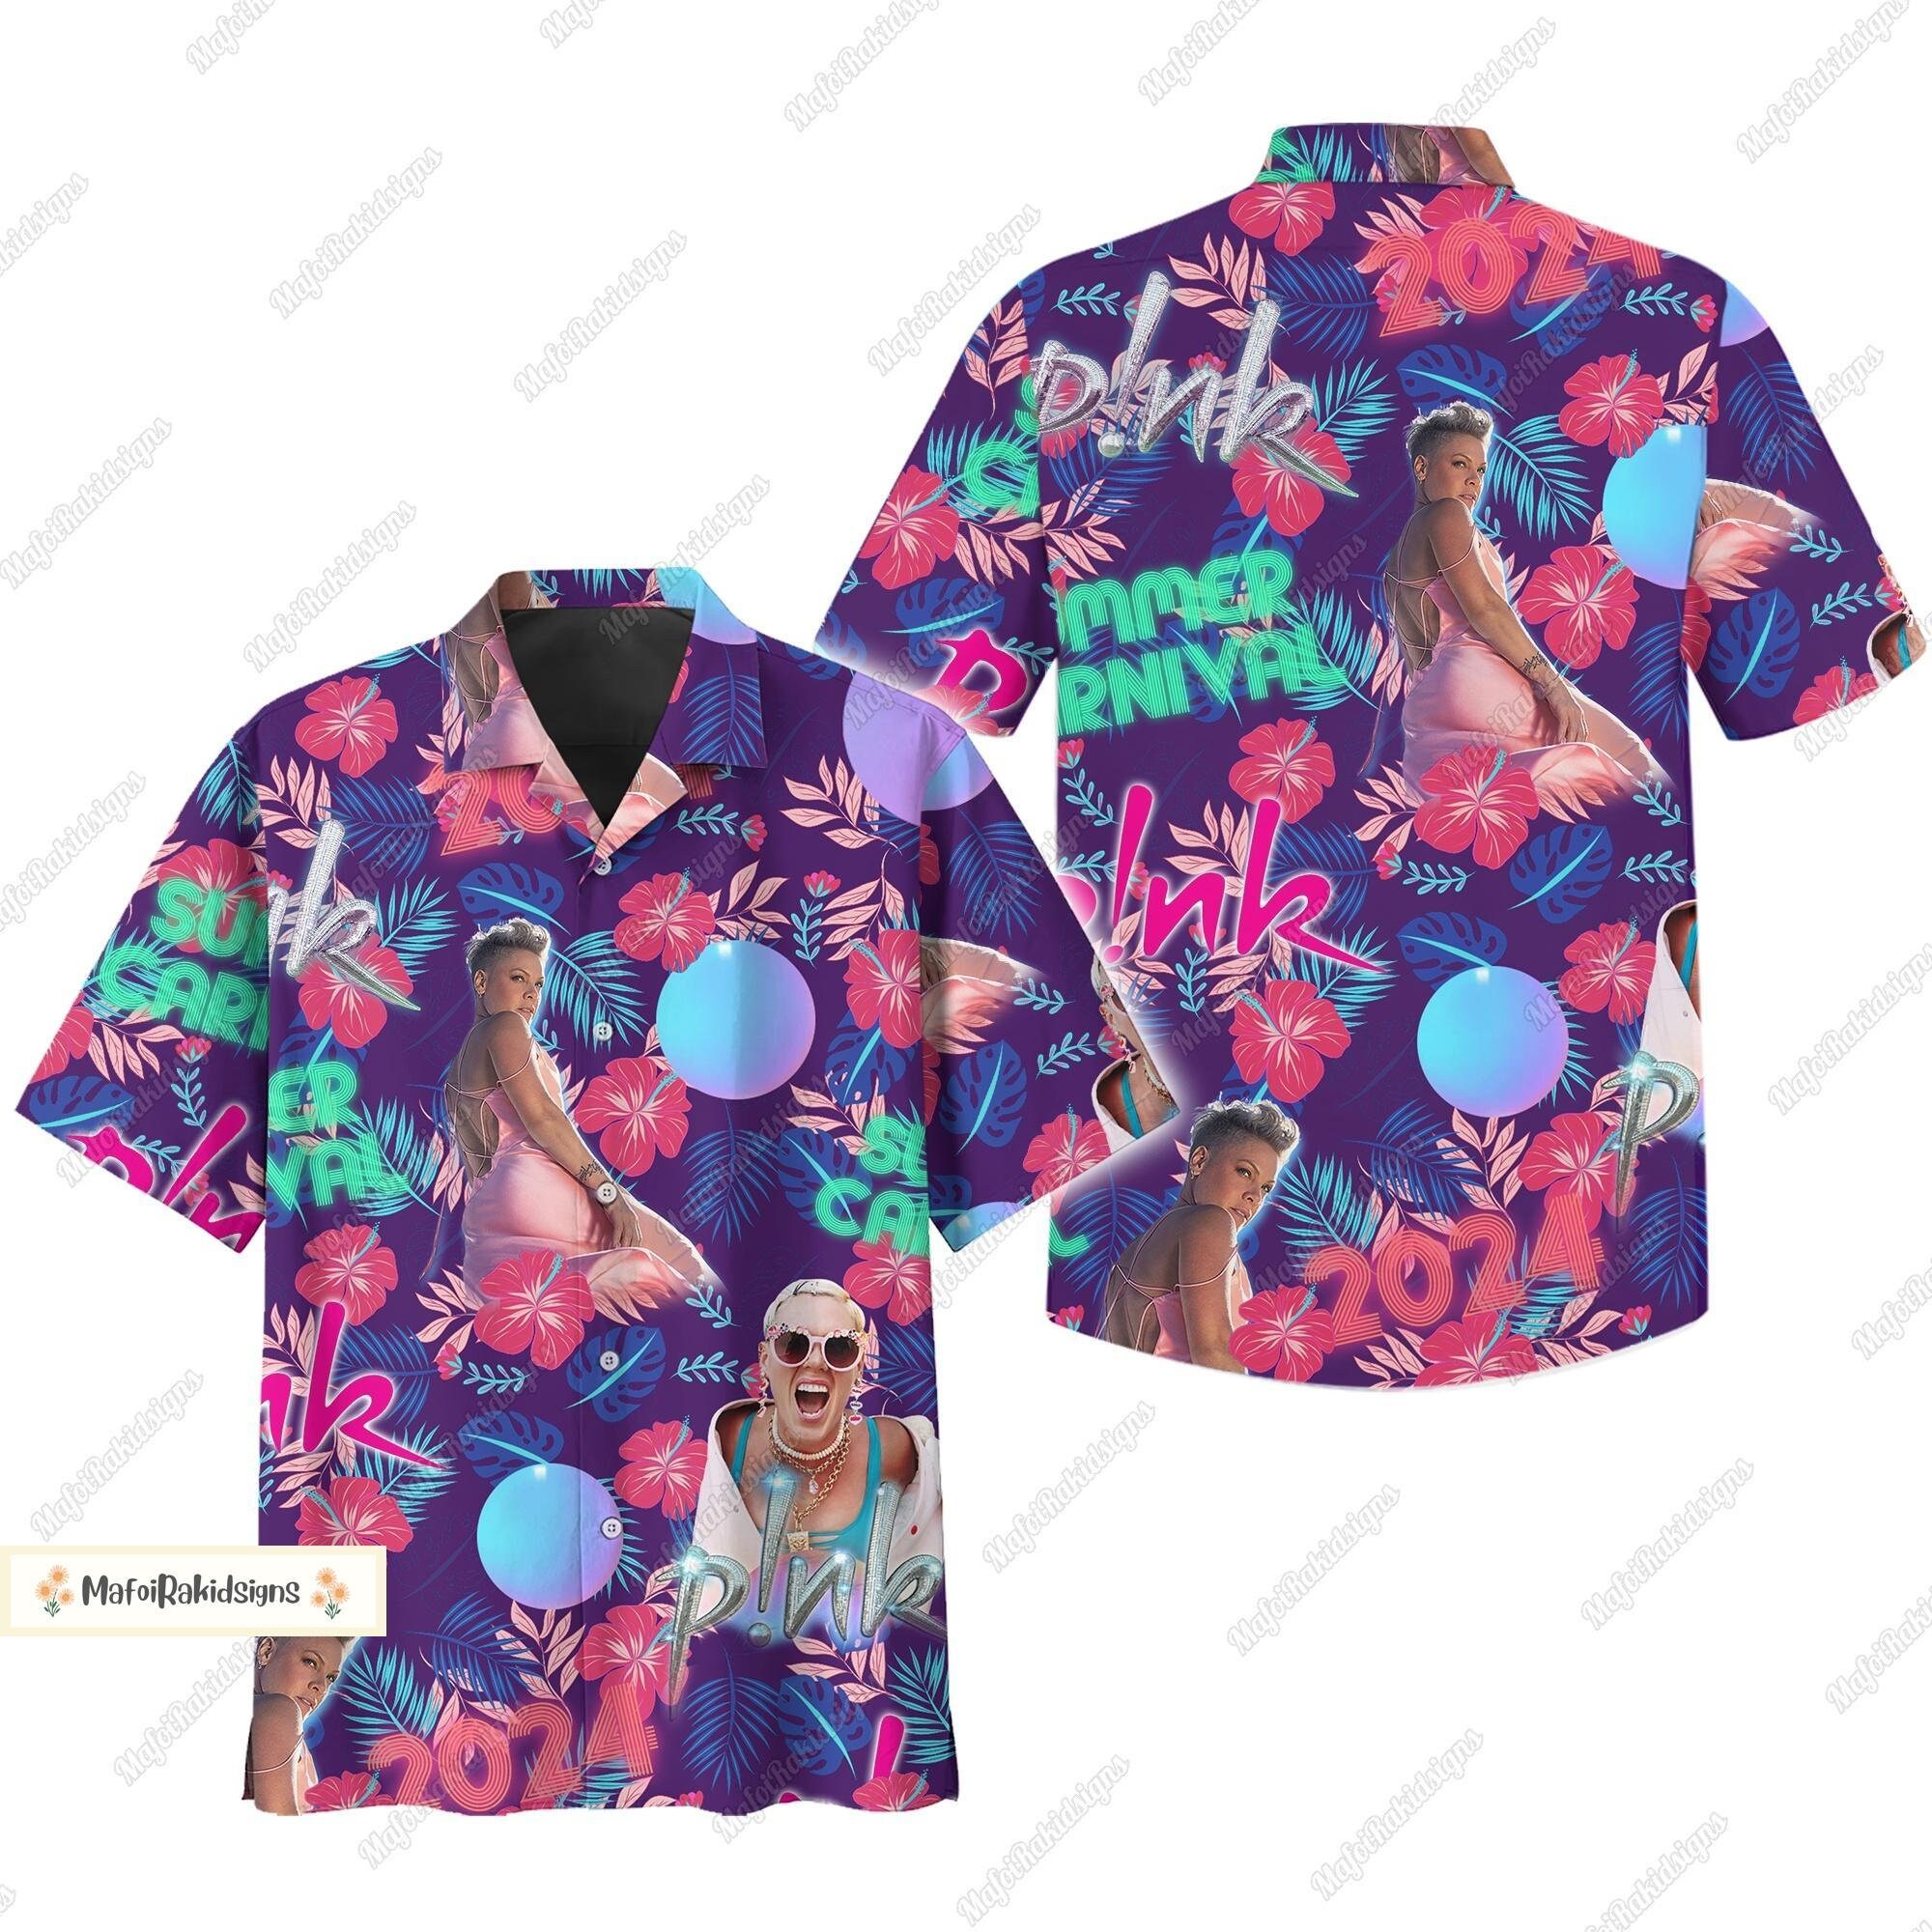 Pink P!nk Shirt, Pink Singer Hawaii Shirt, Pink Carnival Summer Shirt